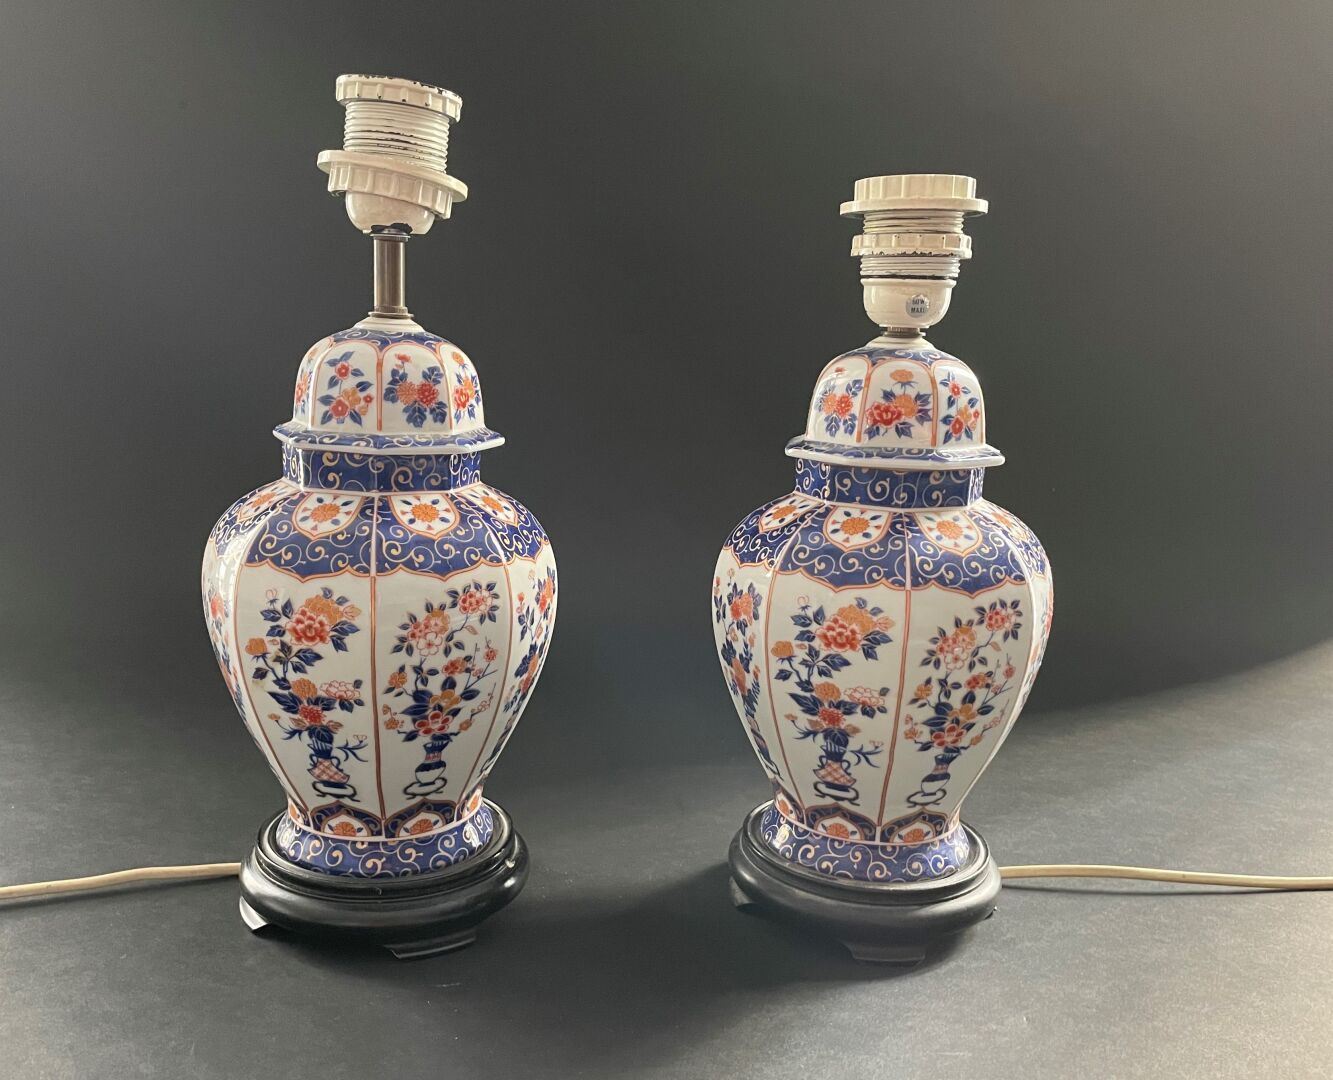 Null 一对伊万里风格的瓷质有盖花瓶，被安装为灯具。

花瓶的高度：22.5厘米

总高度：31厘米